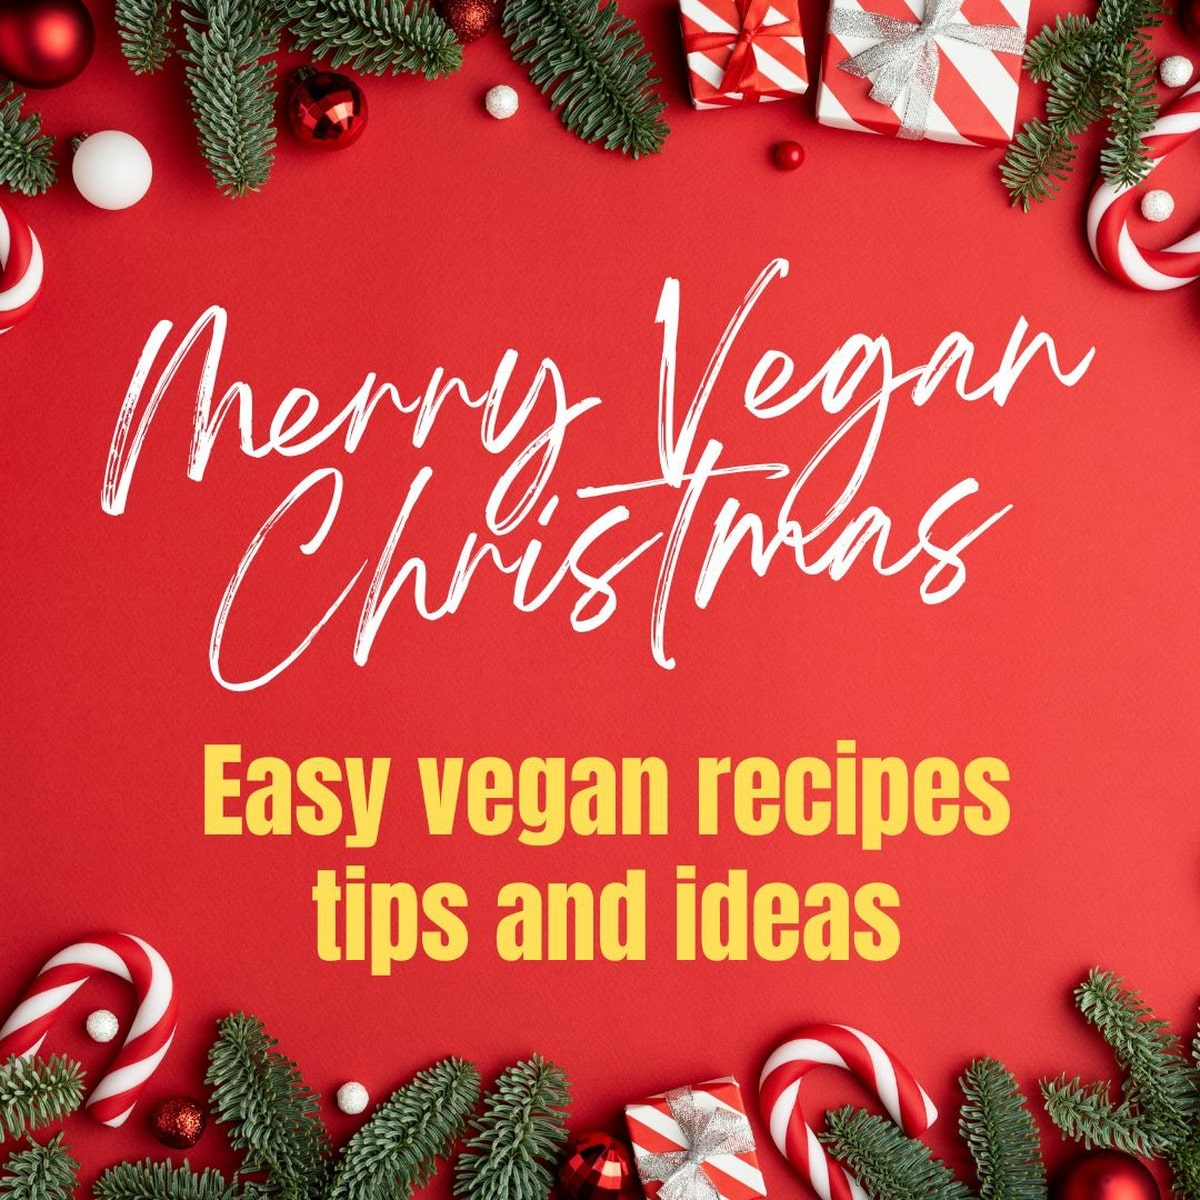 Merry Vegan Christmas banner